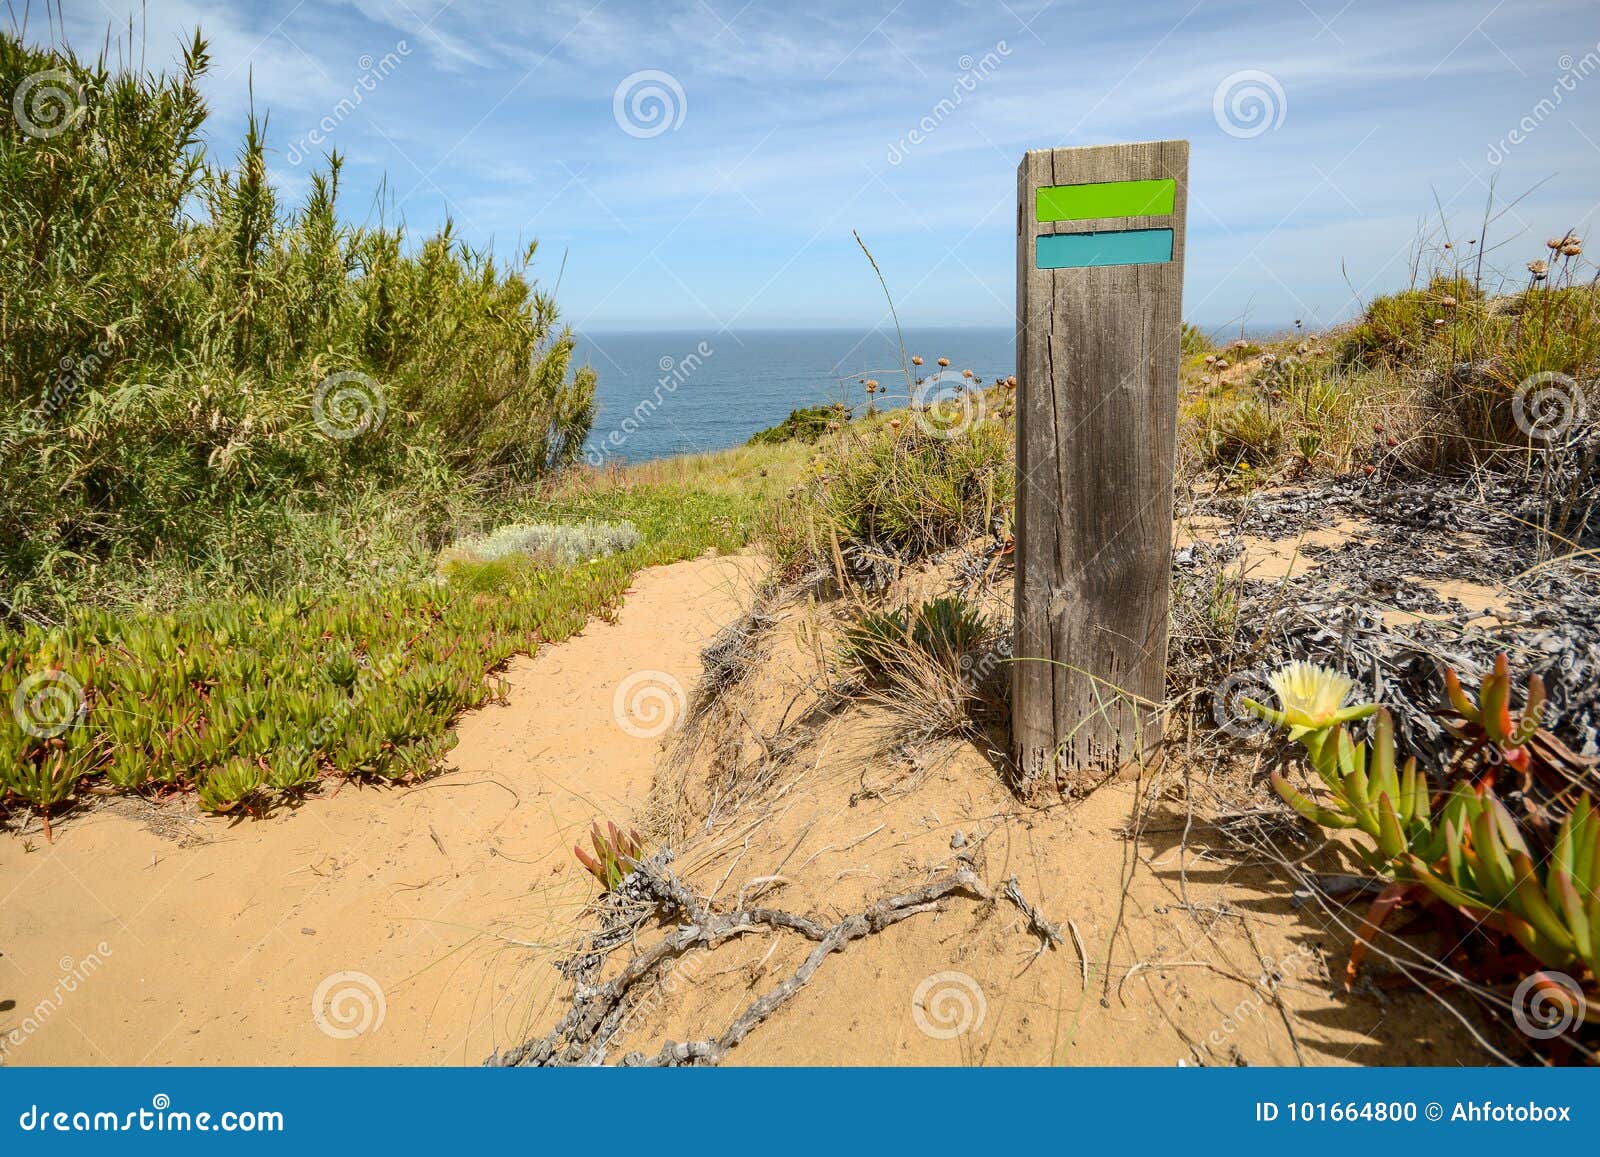 hiking trail rota vicentina from odeceixe to zambujeira do mar through alentejo landscape, portugal